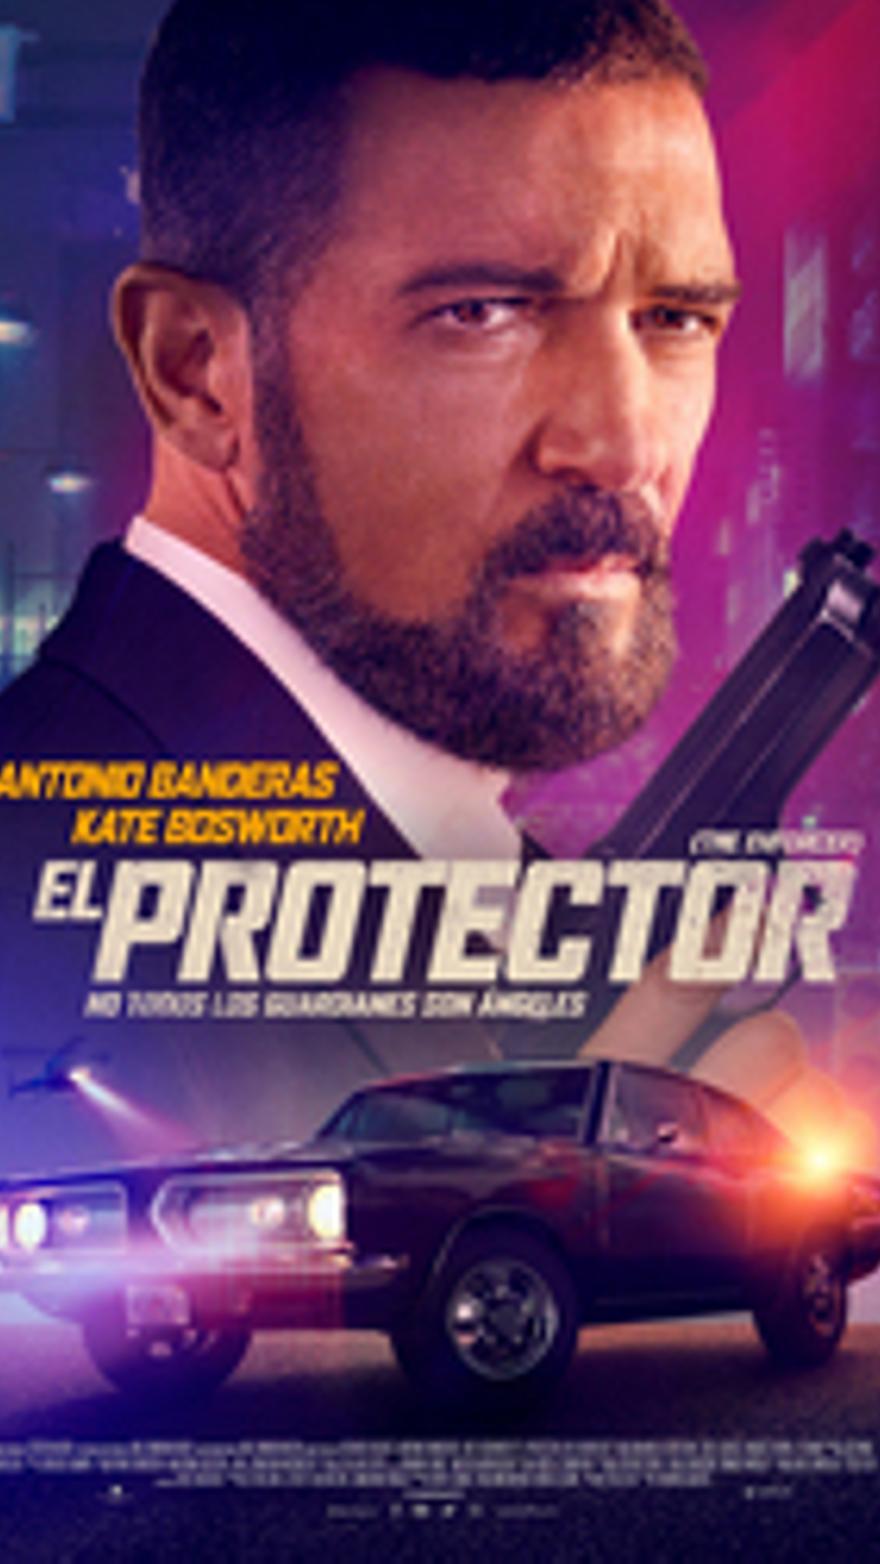 El protector (The Enforcer)